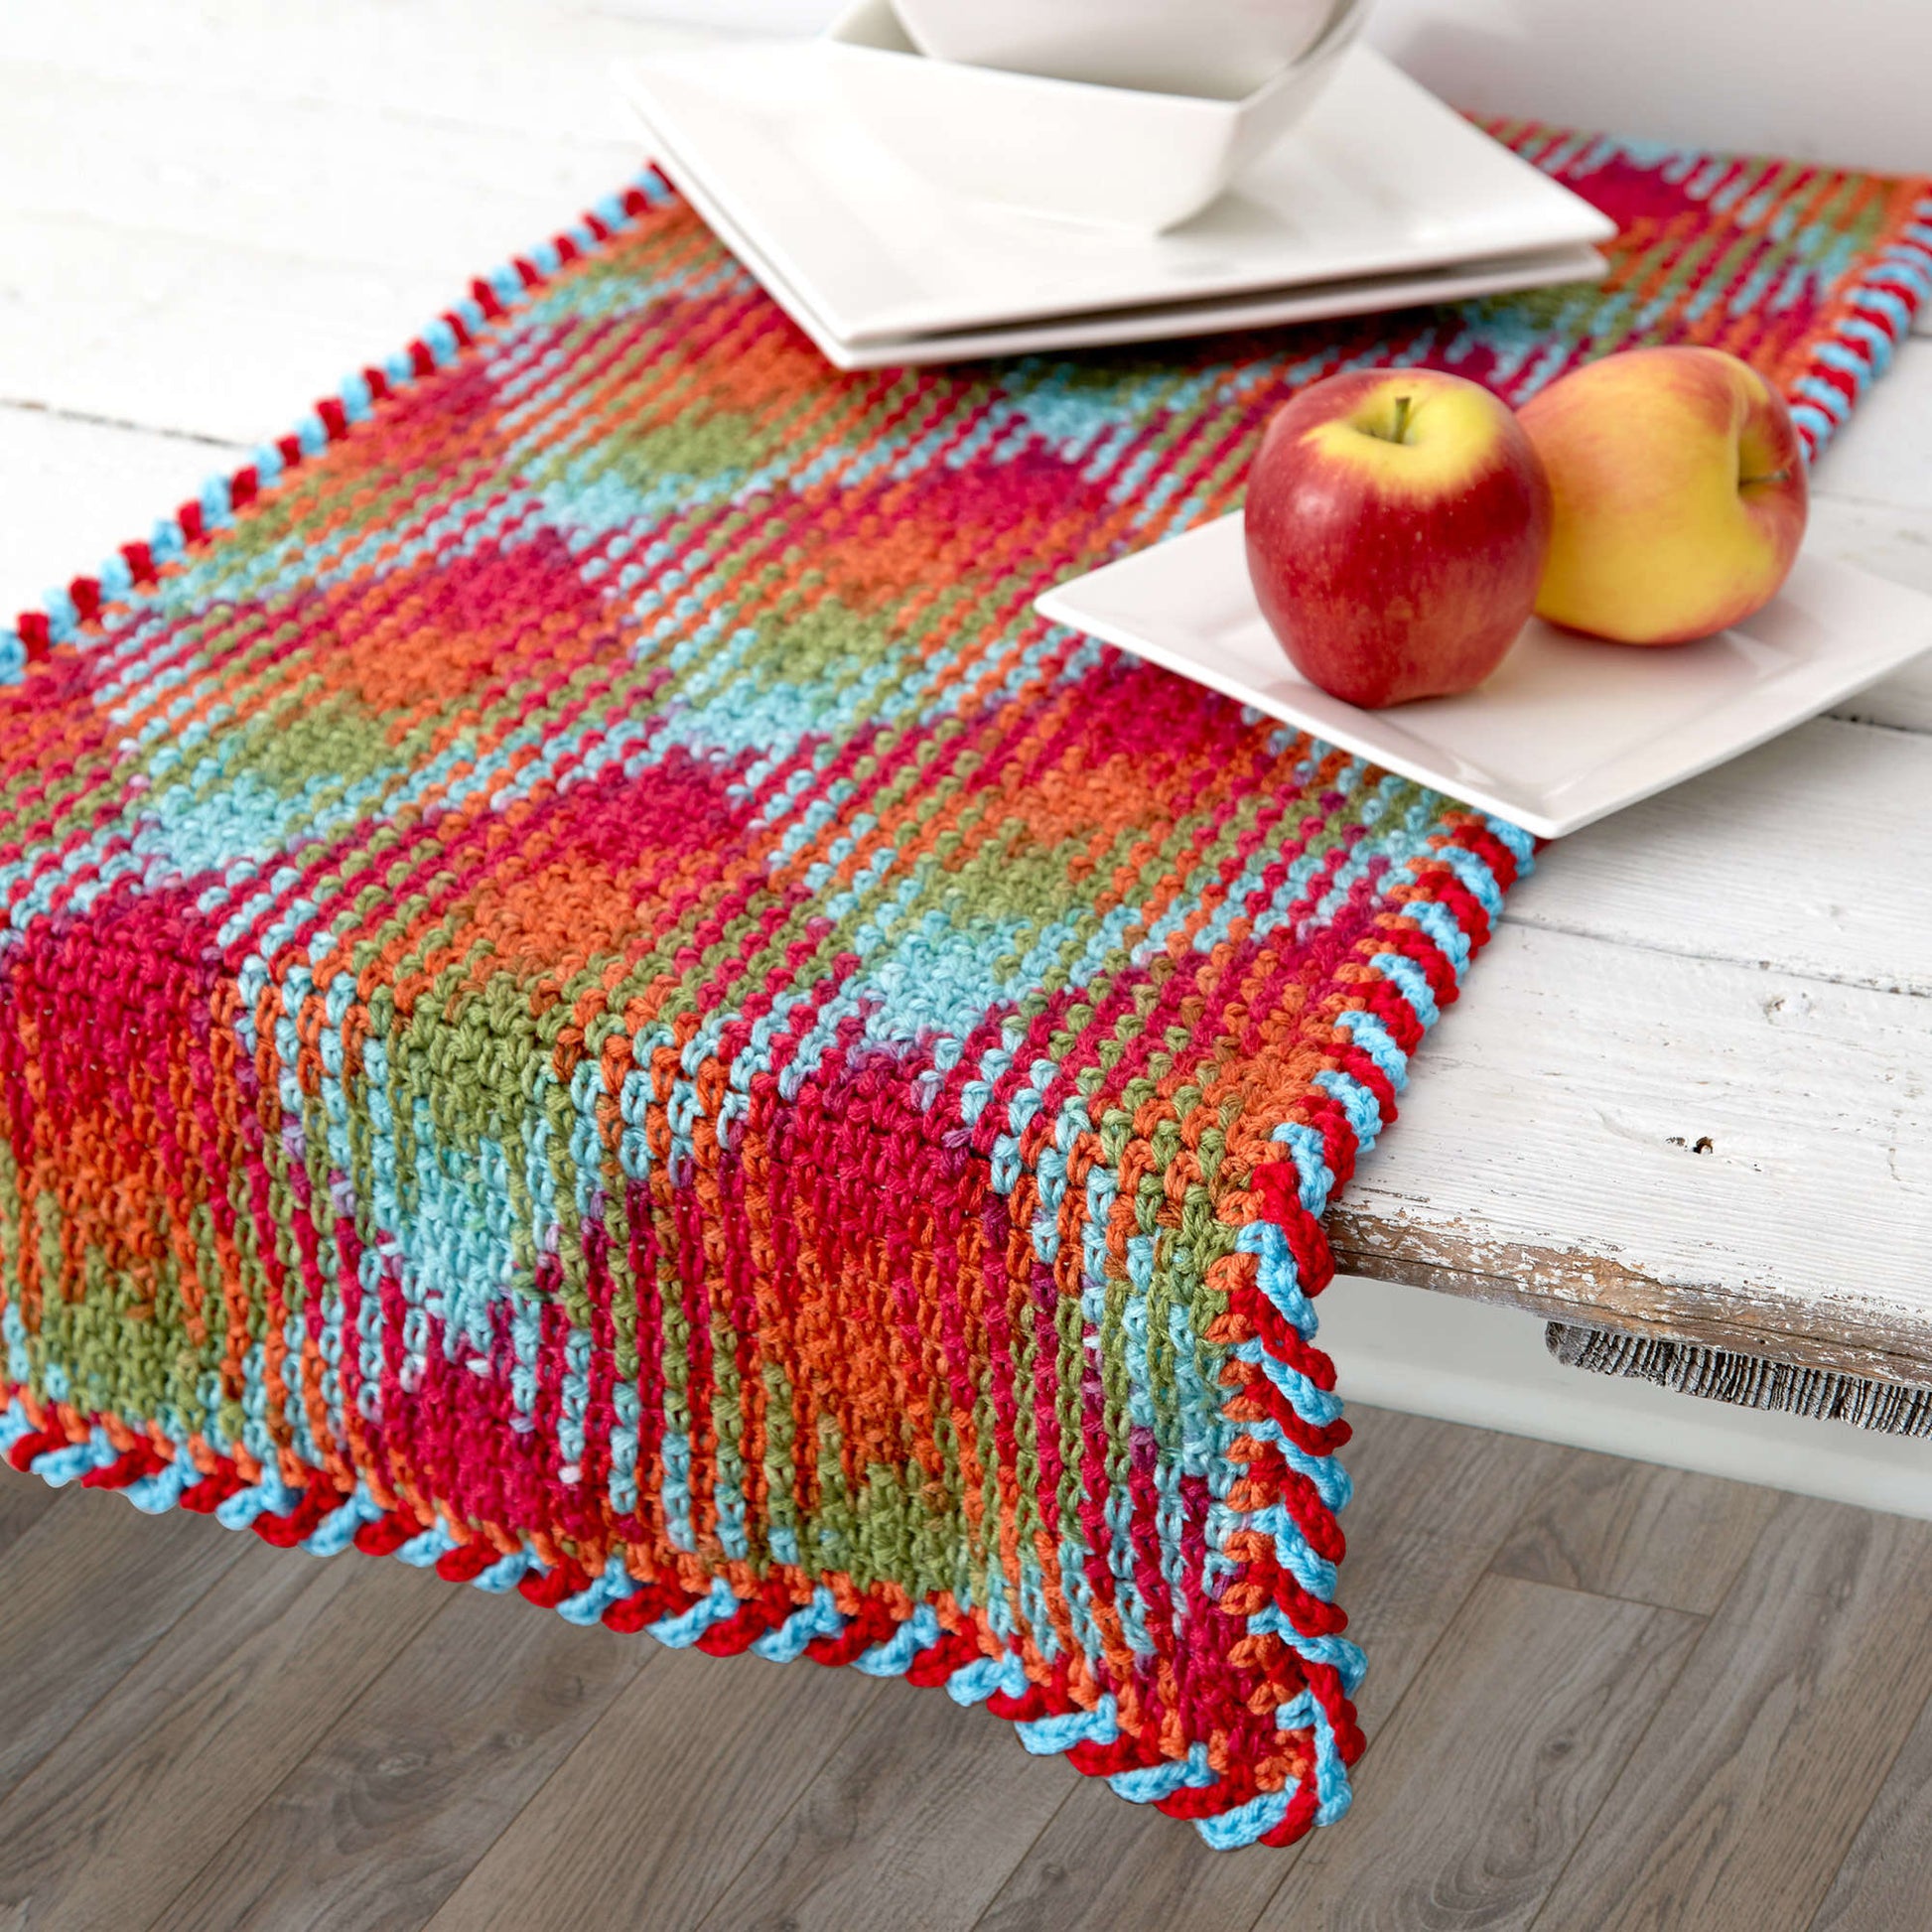 Free Red Heart Planned Pooling Argyle Table Runner Crochet Pattern